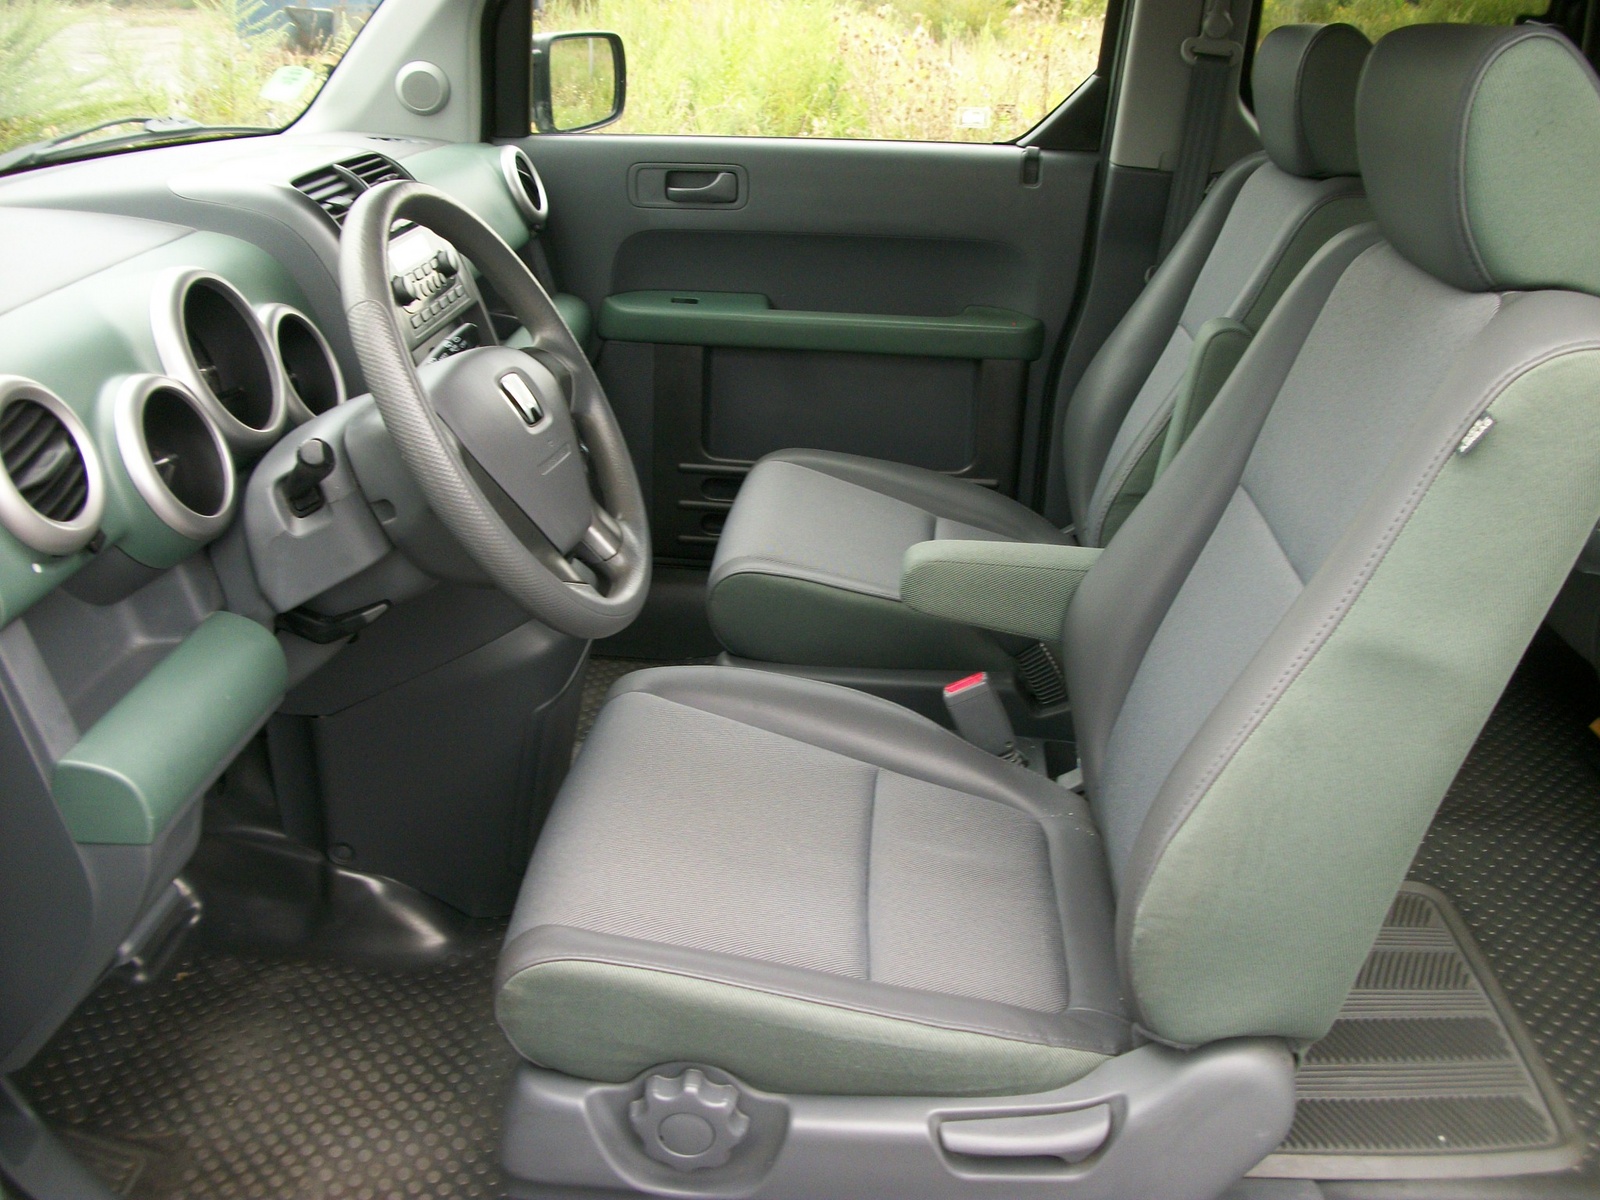 2005 Honda element interior dimensions #5